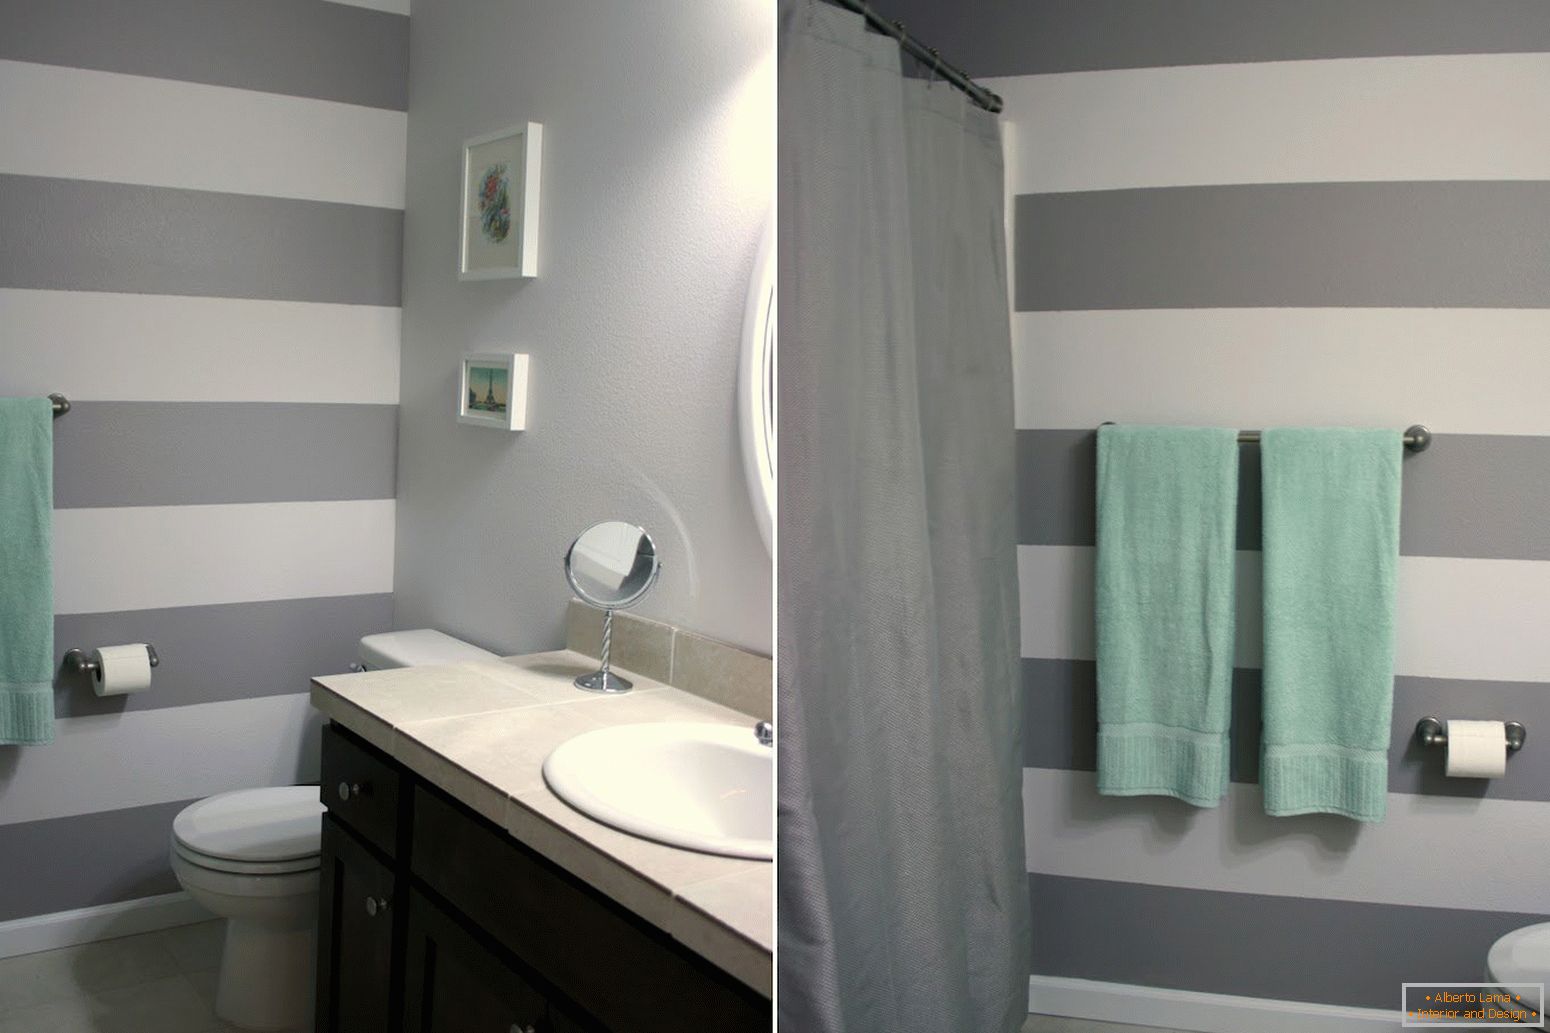 Horizontal stripes in the bathroom design